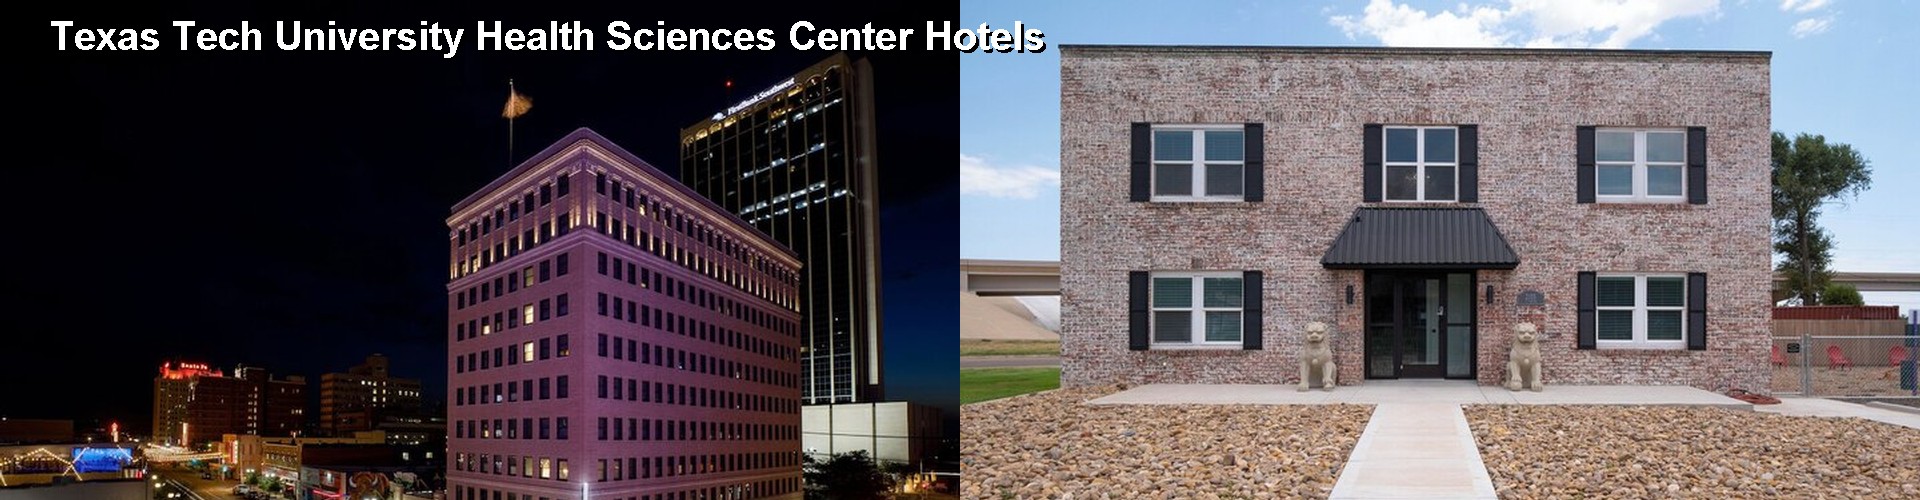 3 Best Hotels near Texas Tech University Health Sciences Center